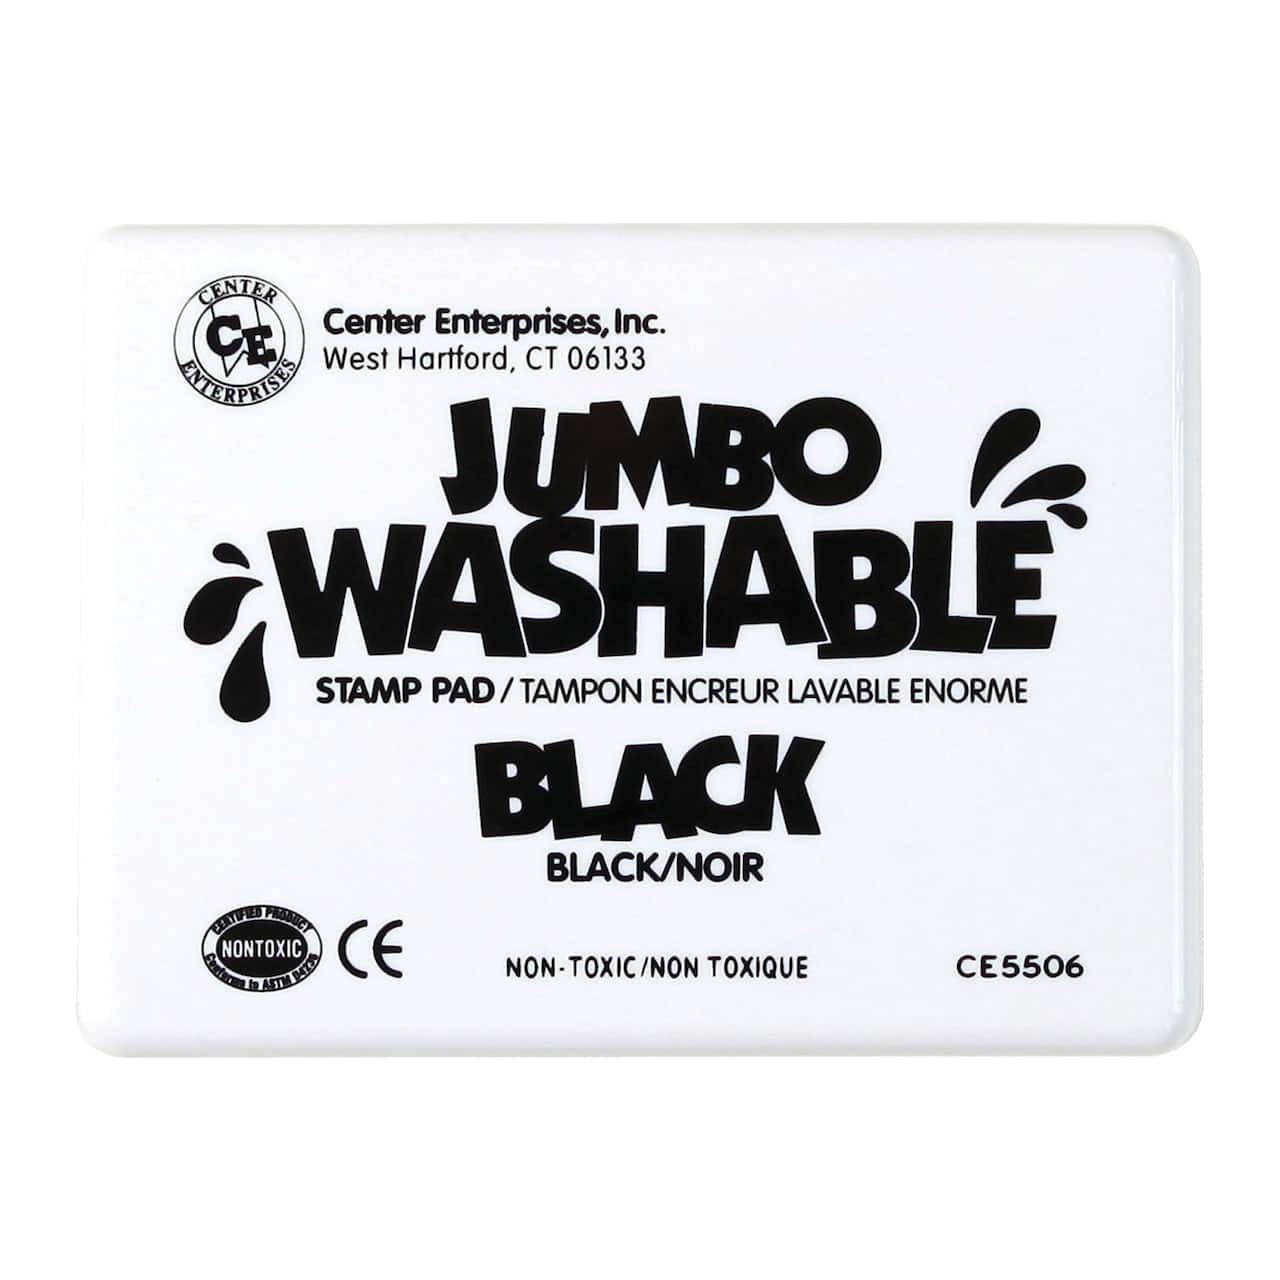 Center Enterprises Jumbo Washable Unscented Stamp Pad, 2ct.